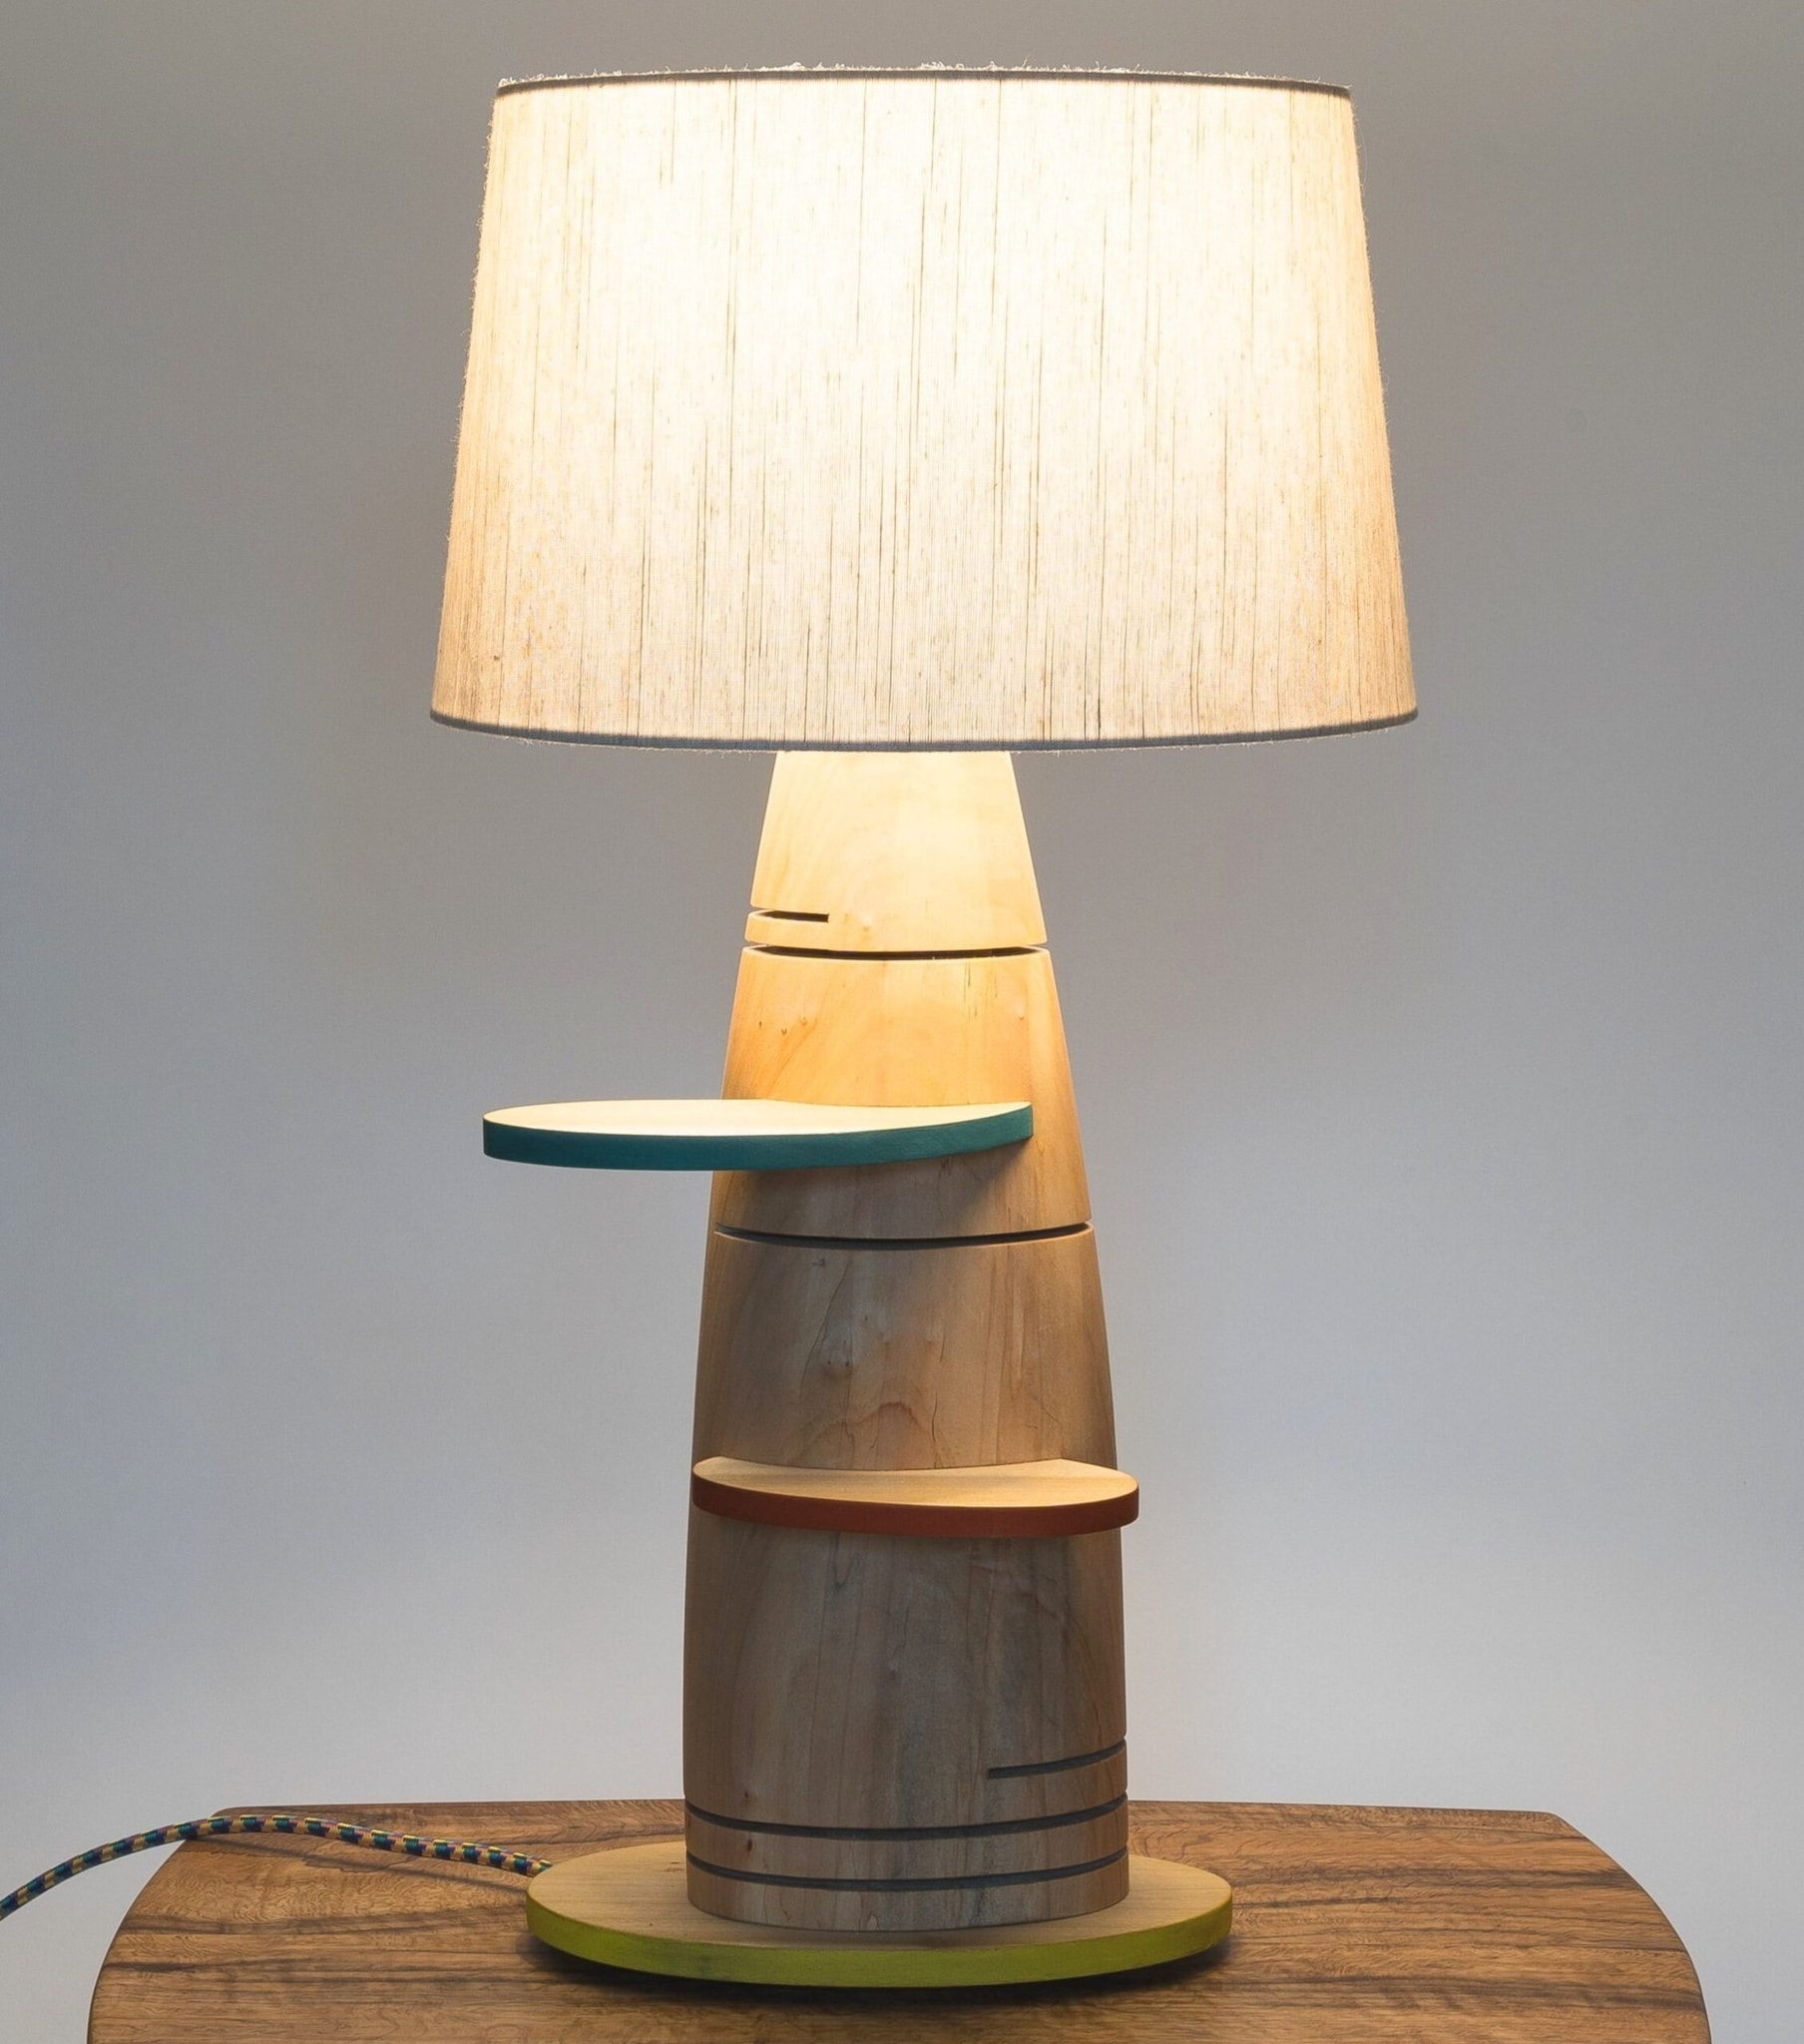 Lamp by Lauren Verdugo, Craft in America